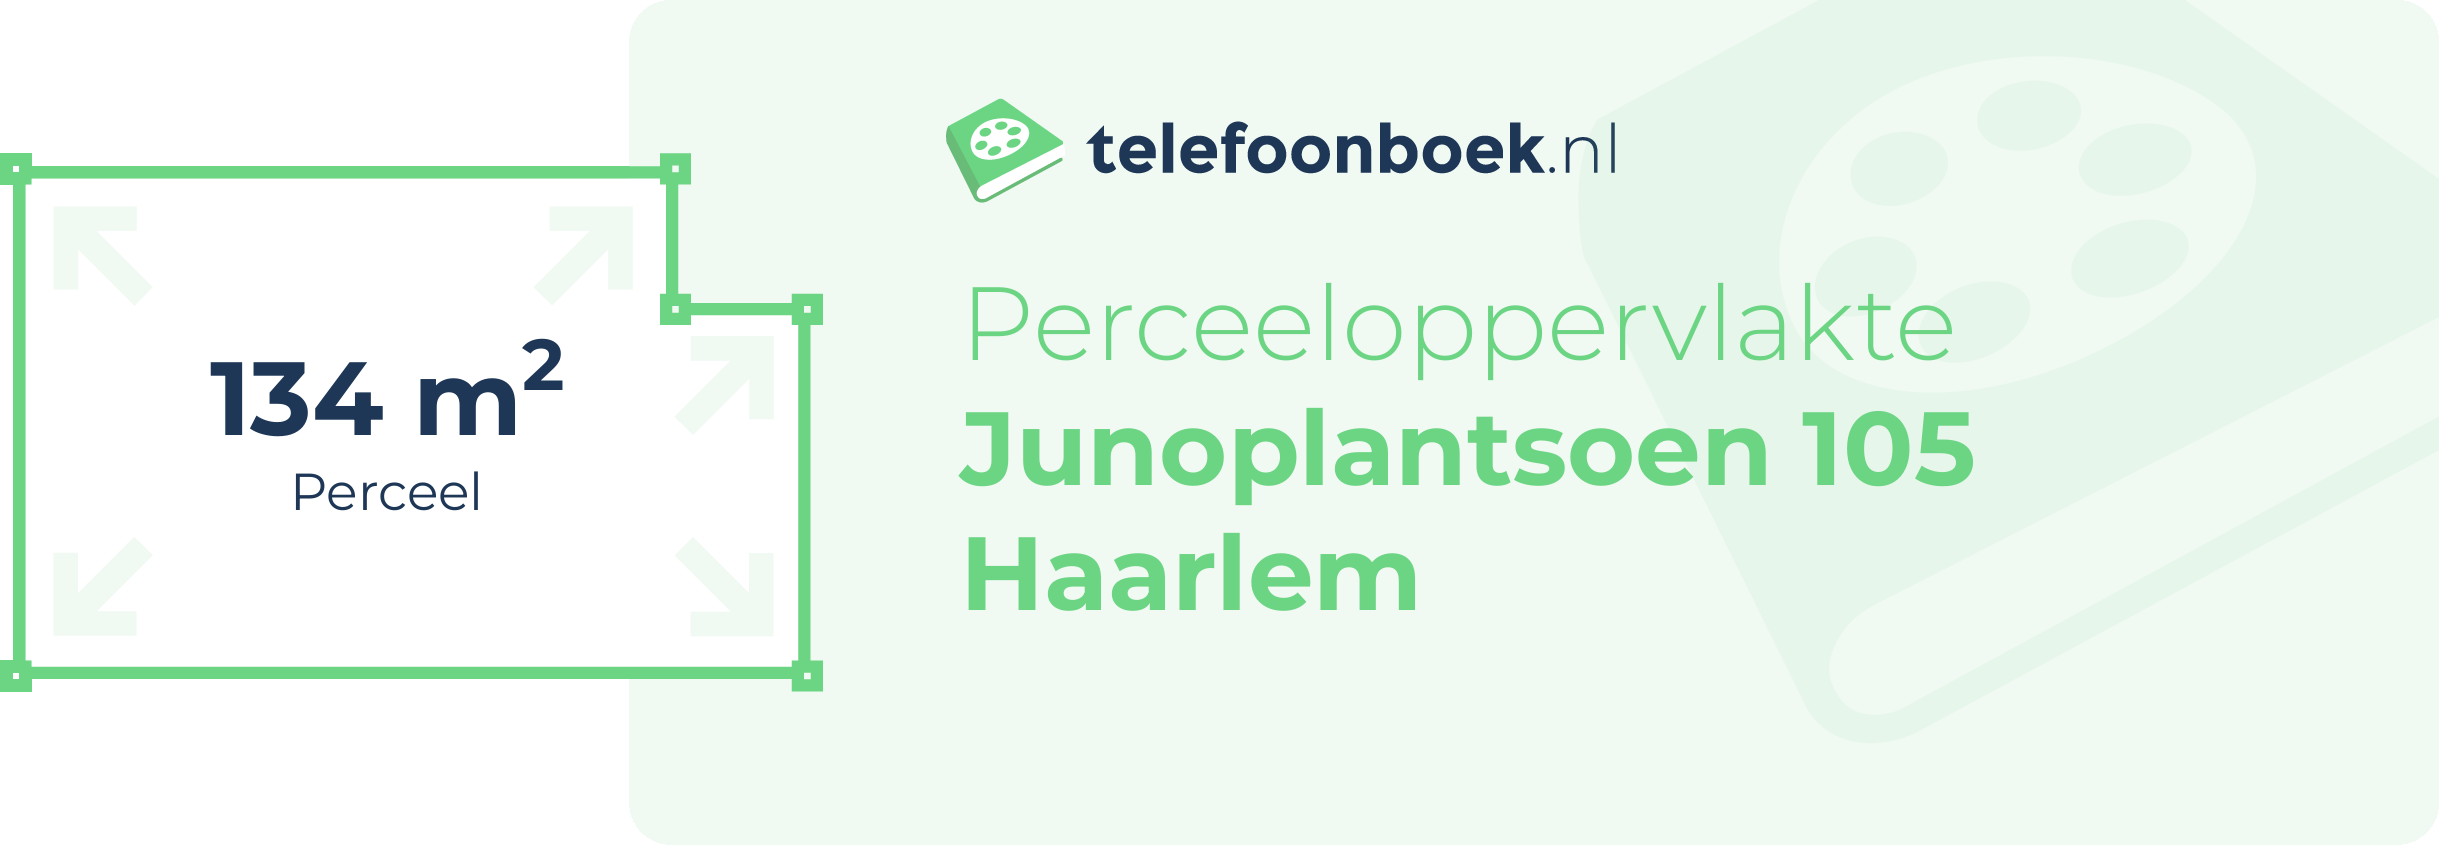 Perceeloppervlakte Junoplantsoen 105 Haarlem